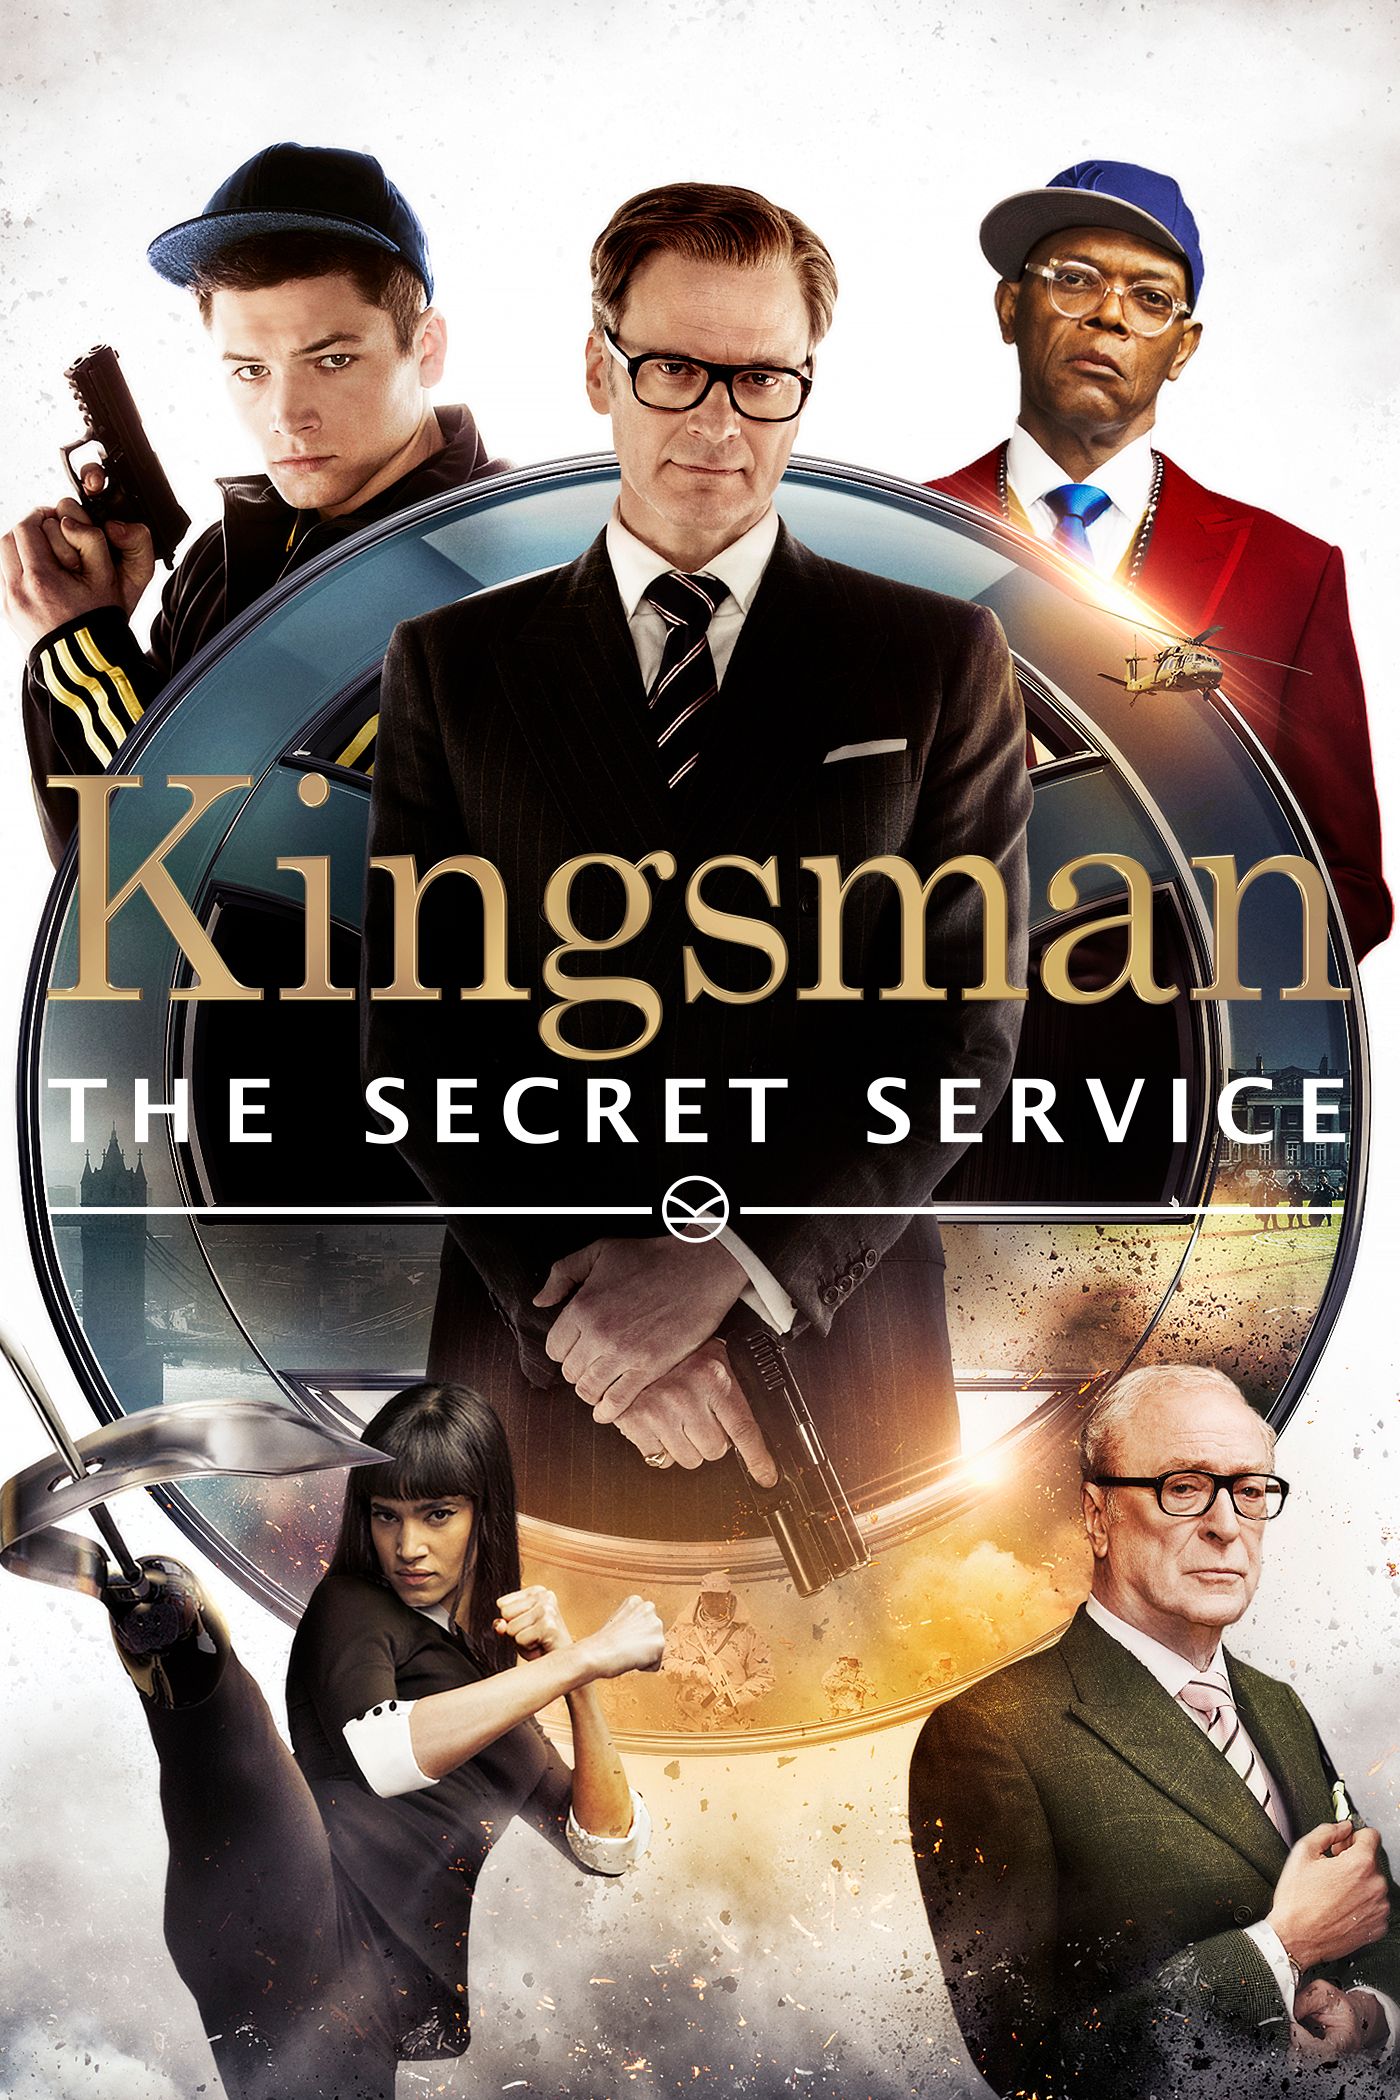 kingsman 2 watch full movie online free